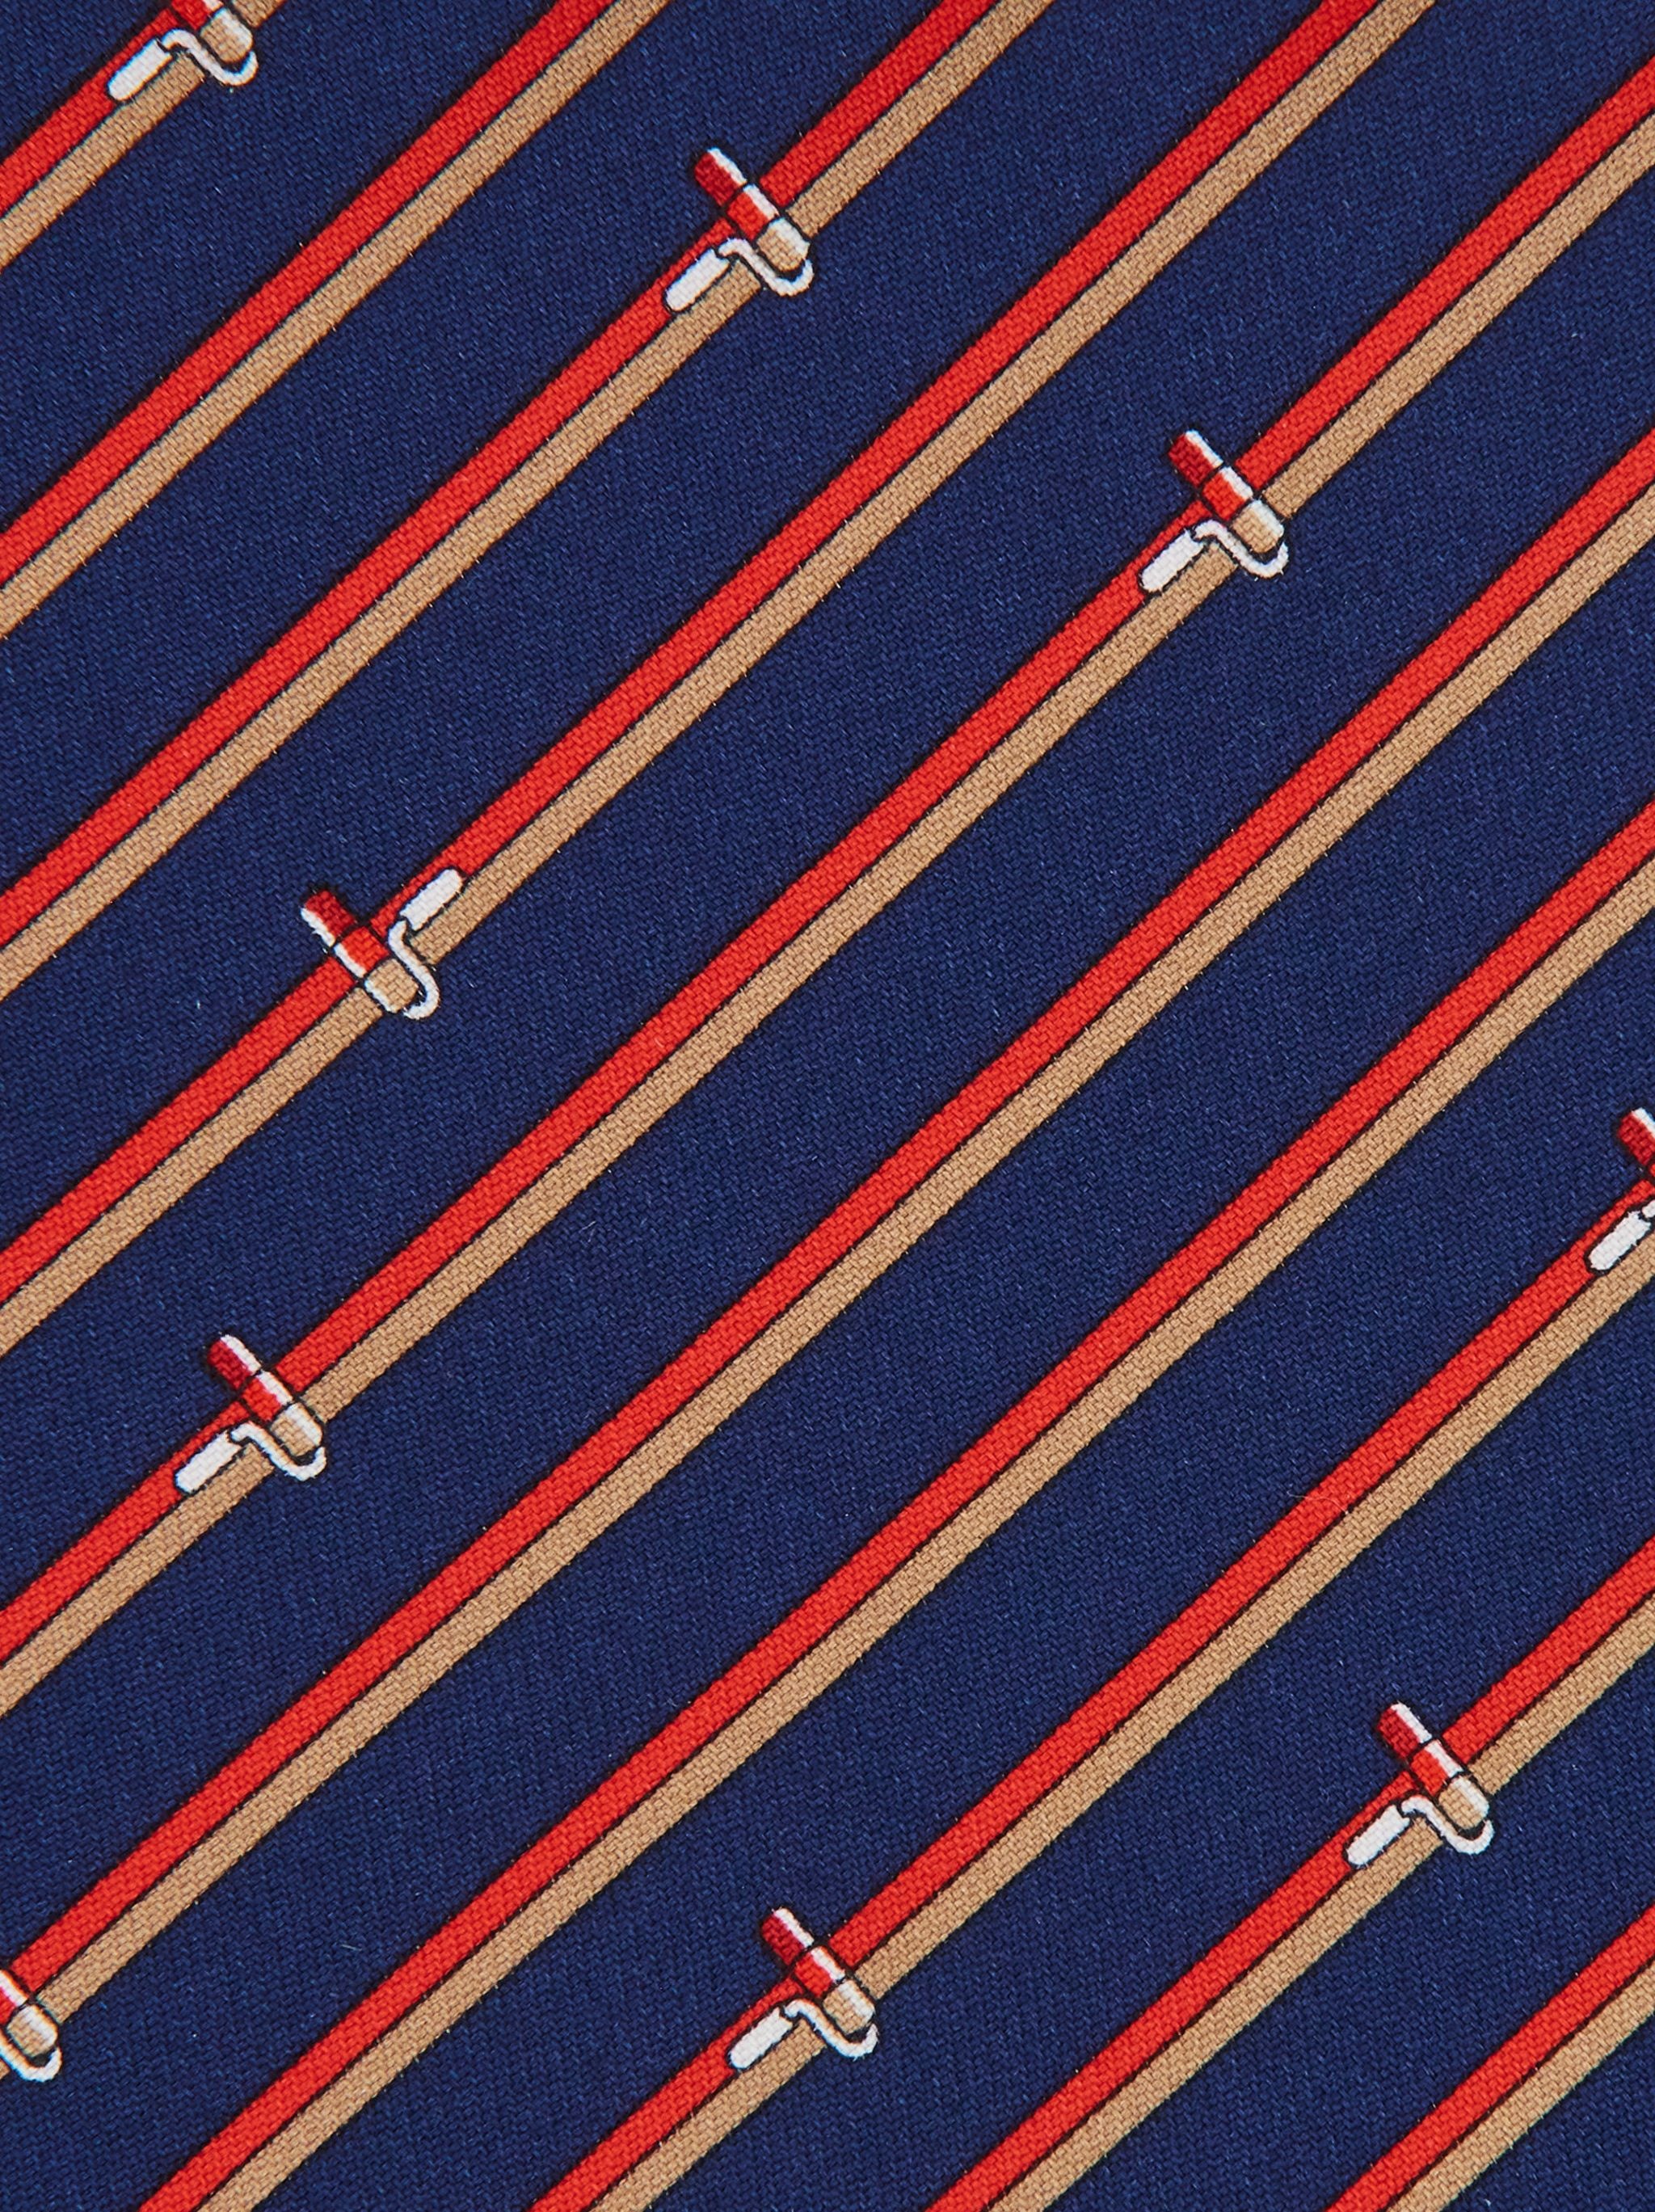 Tonal print silk tie - 2